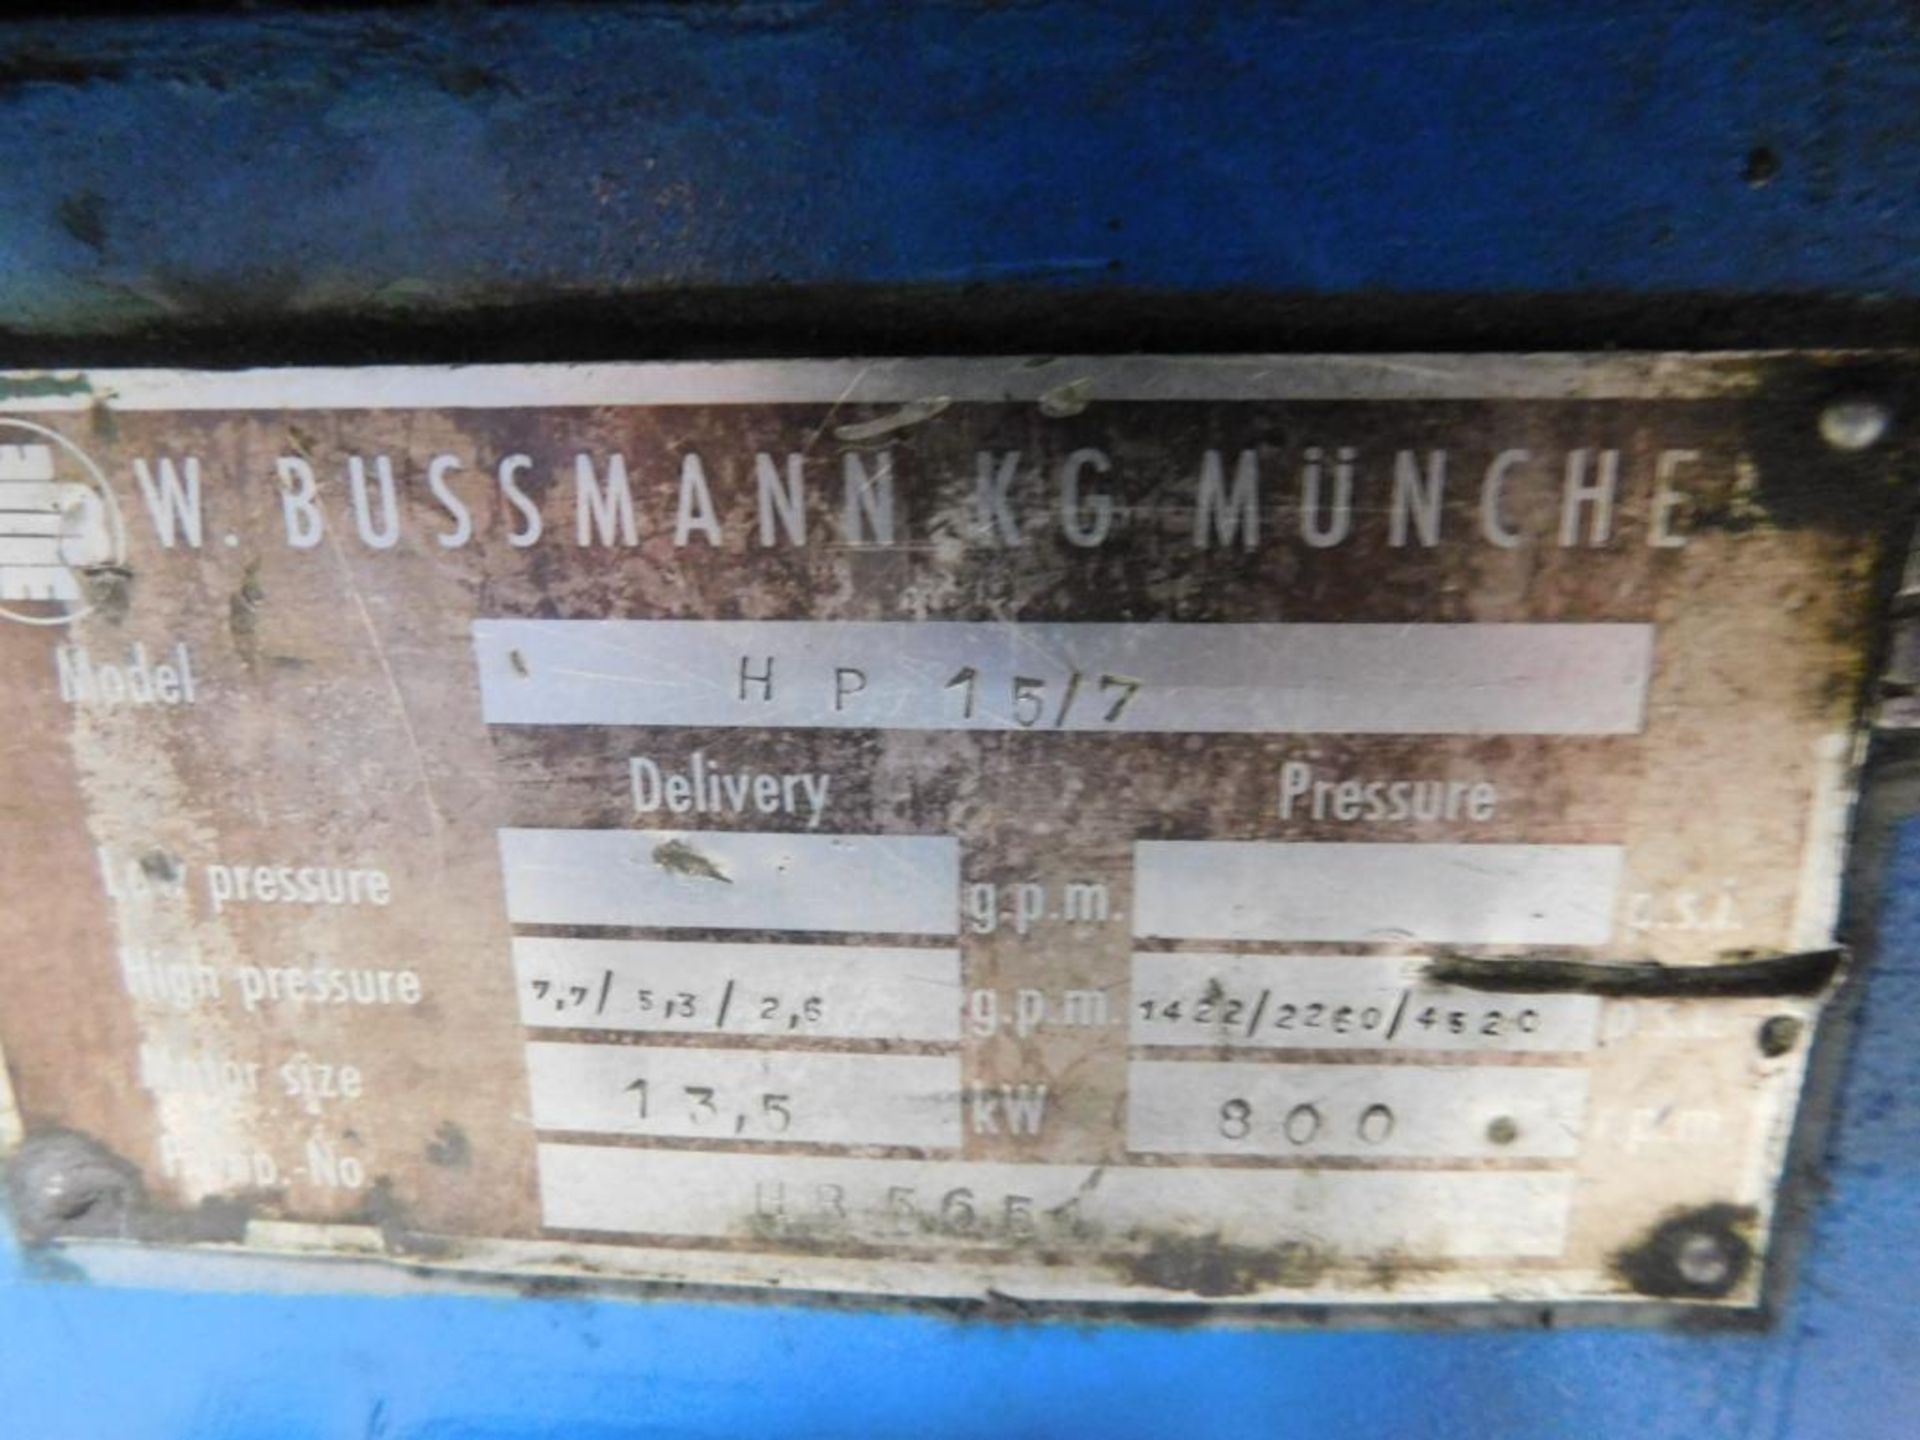 Bussmann Simetag 200 Ton Powder Compacting Press, Hydraulic, Model HPM-200S, S/N: M2727, 220 Tons Ma - Image 24 of 24